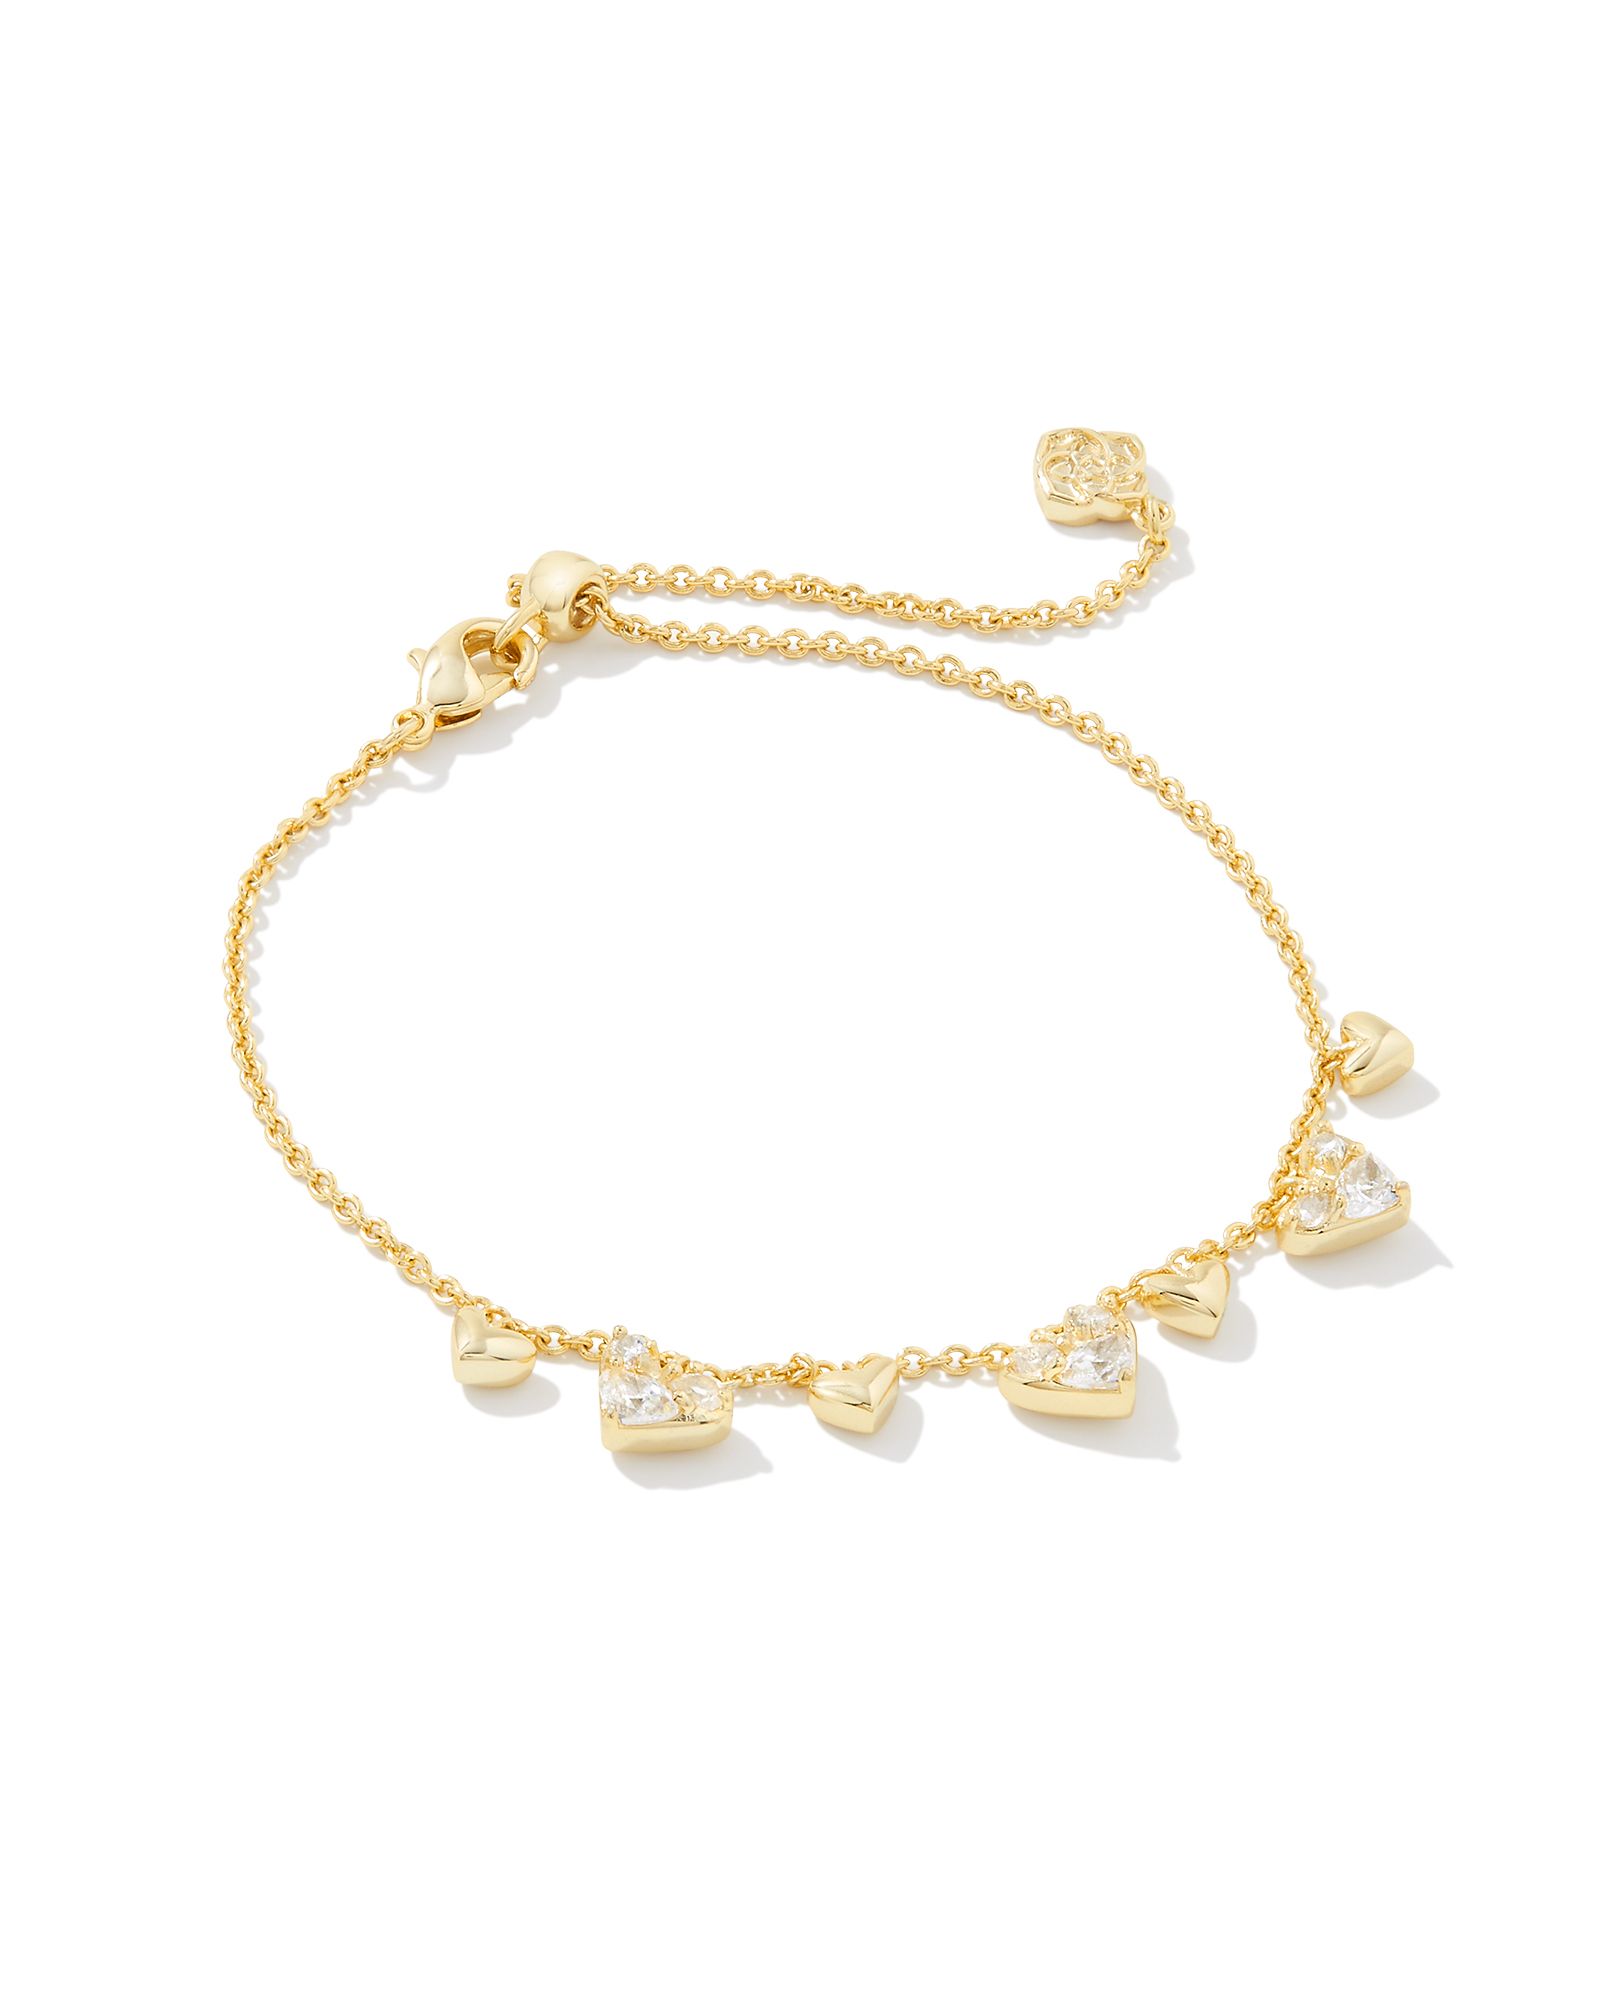 Haven Gold Heart Crystal Chain Bracelet in White Crystal | Kendra Scott | Kendra Scott